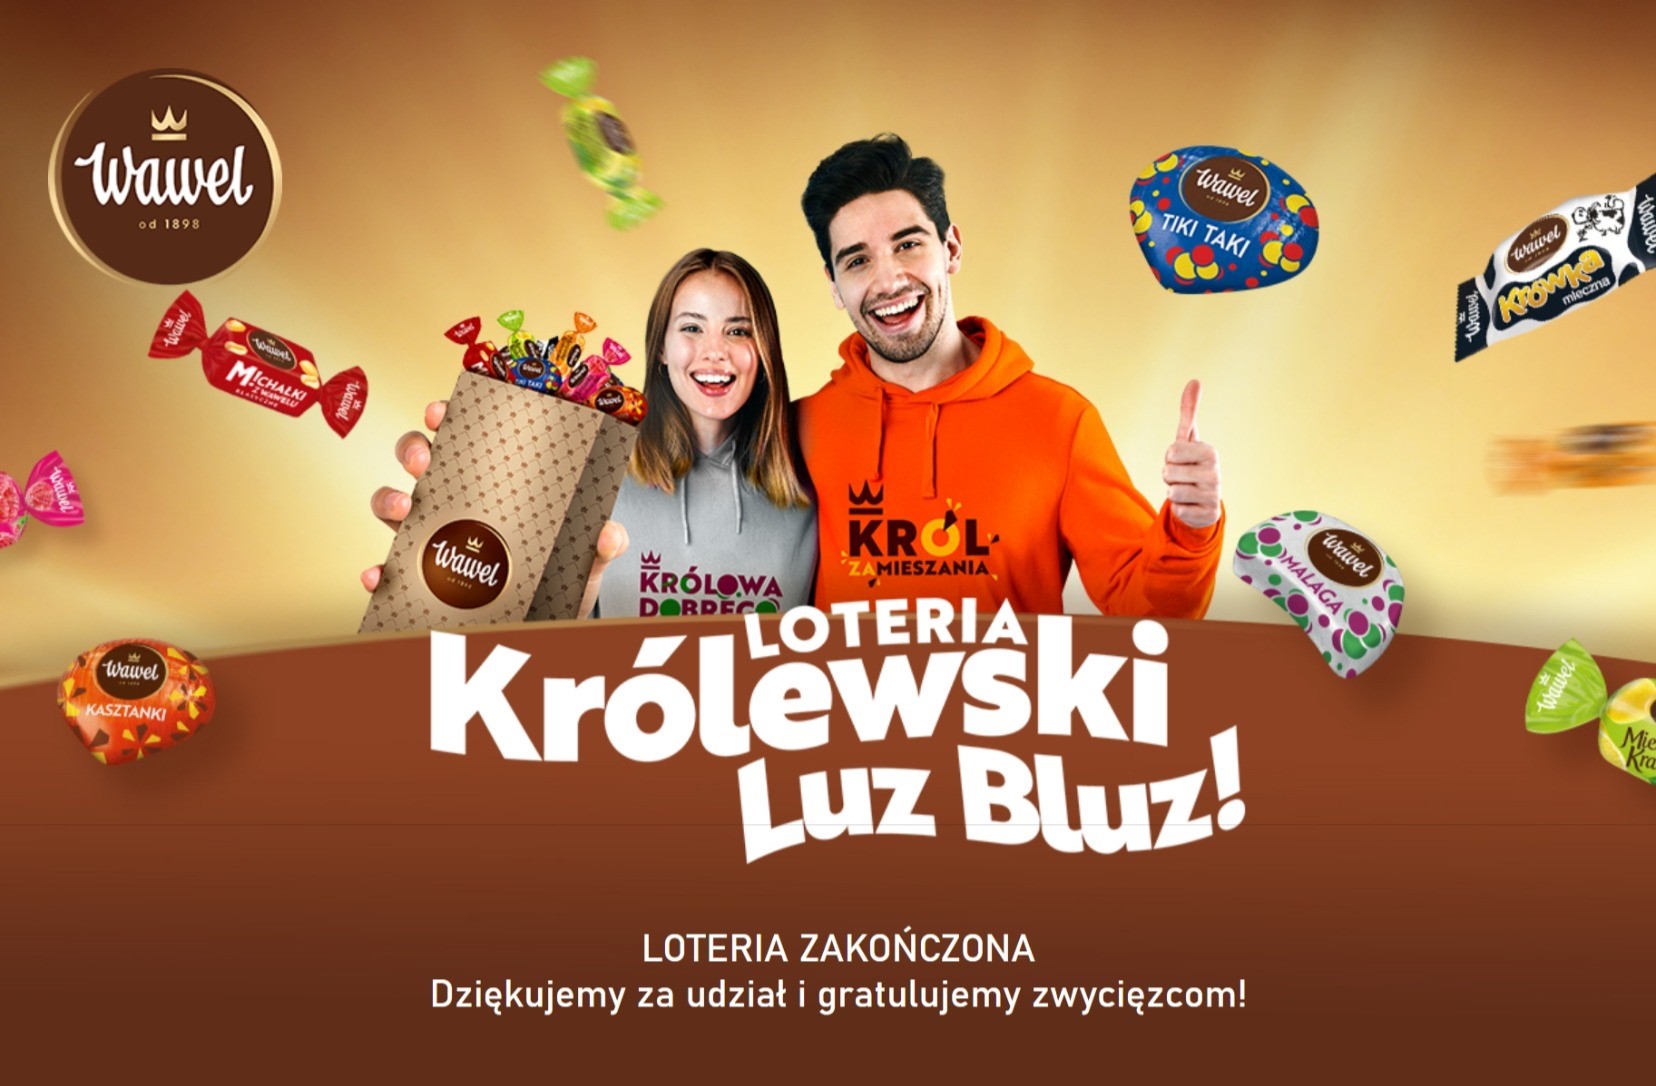 www loteriawawel.pl